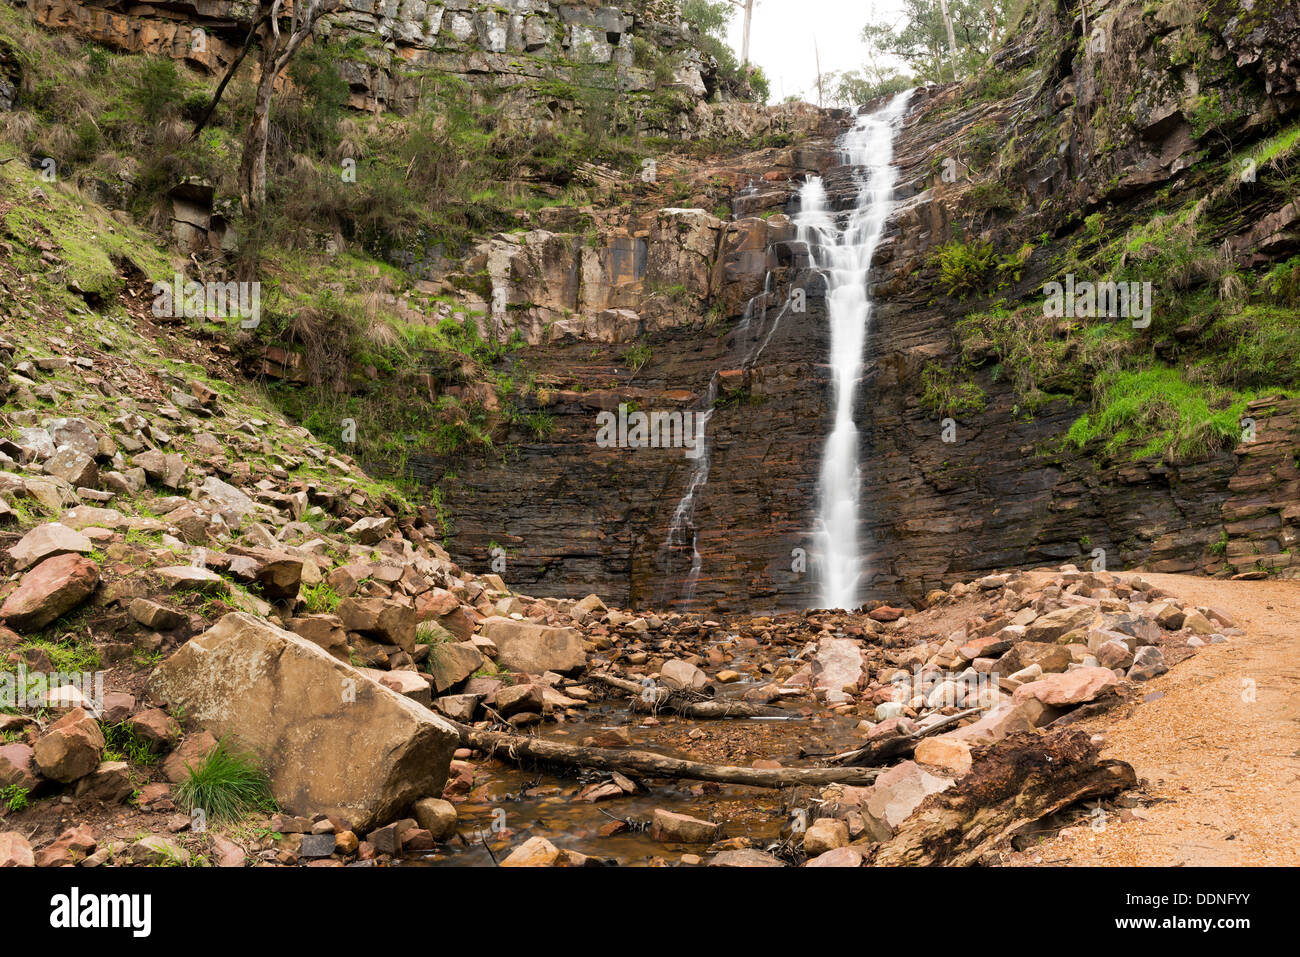 Silverband falls waterfall in the Grampians region of Australia Stock Photo